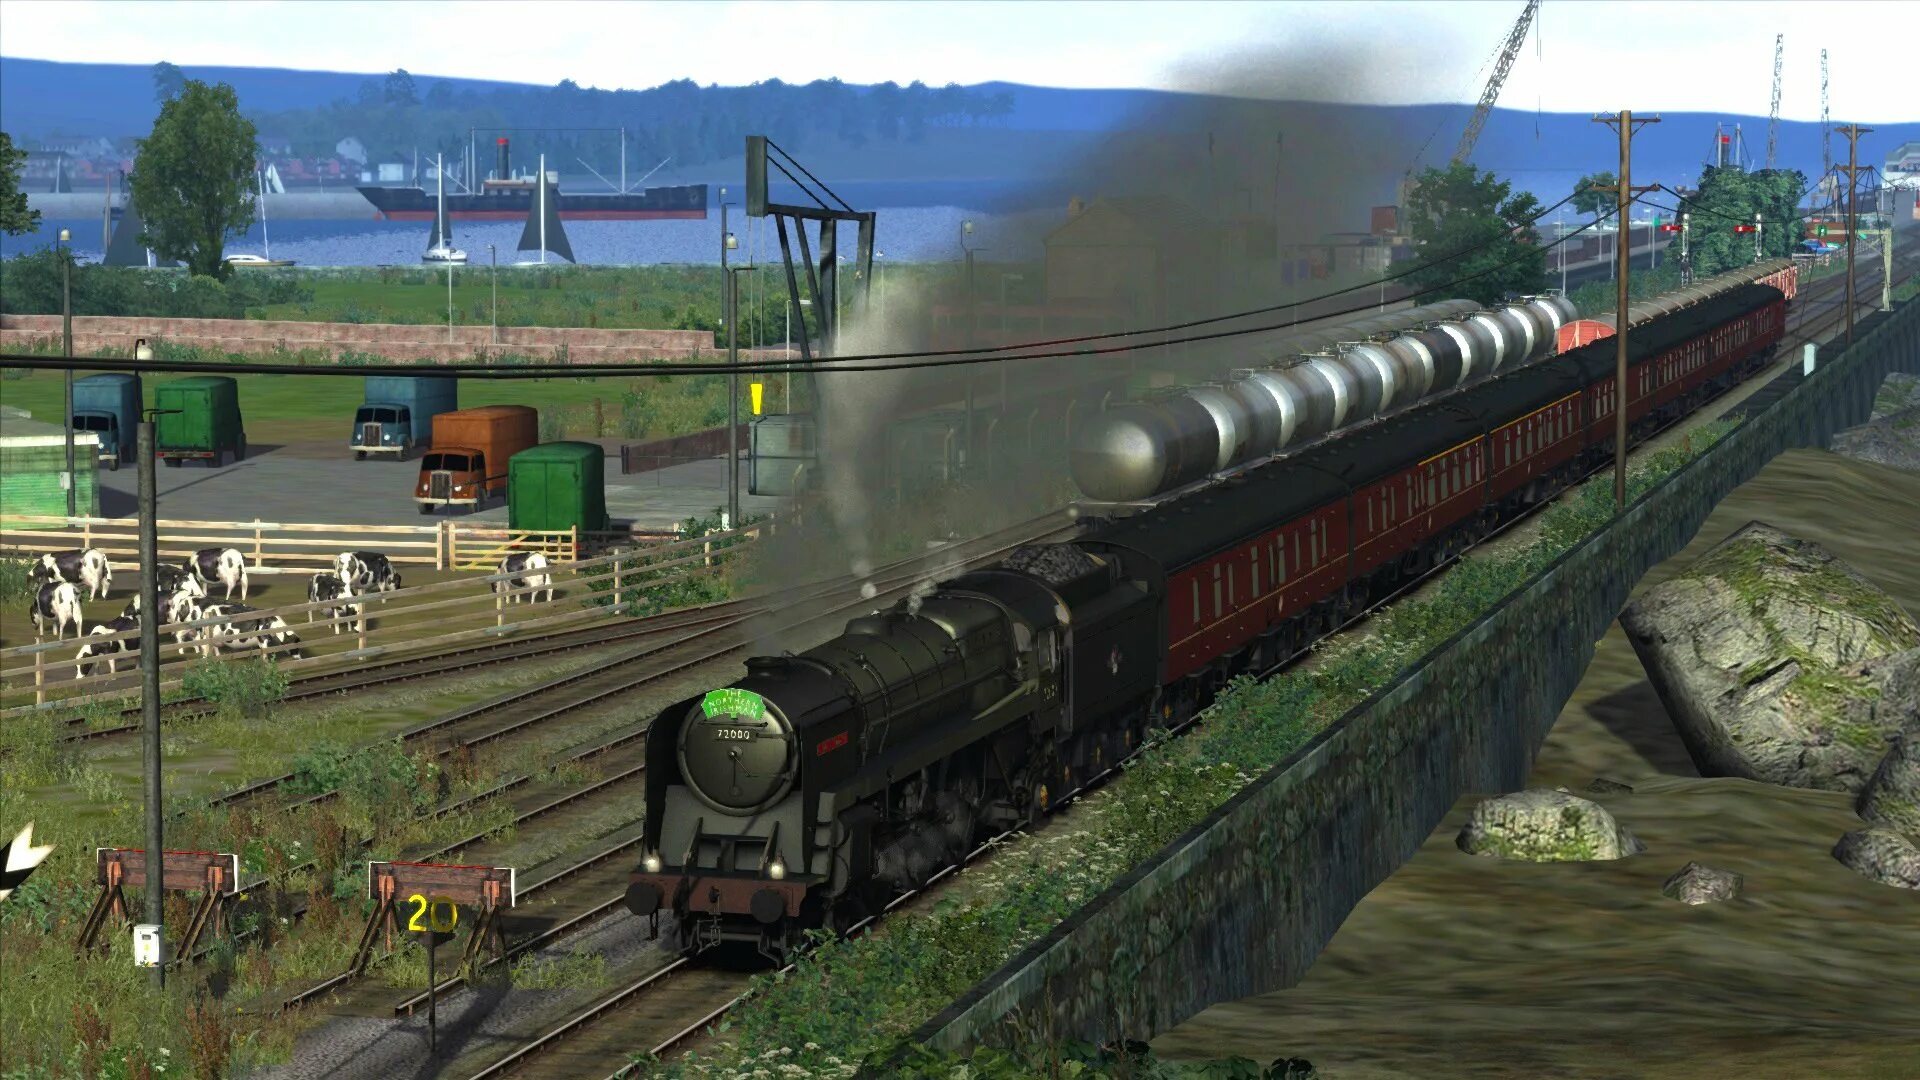 Игра поезд. Траин симулятор 2015. Train Simulator 2015 паровозы. Train Simulator GWR Steam Railmotor Loco add-on. Железнодорожная игра.